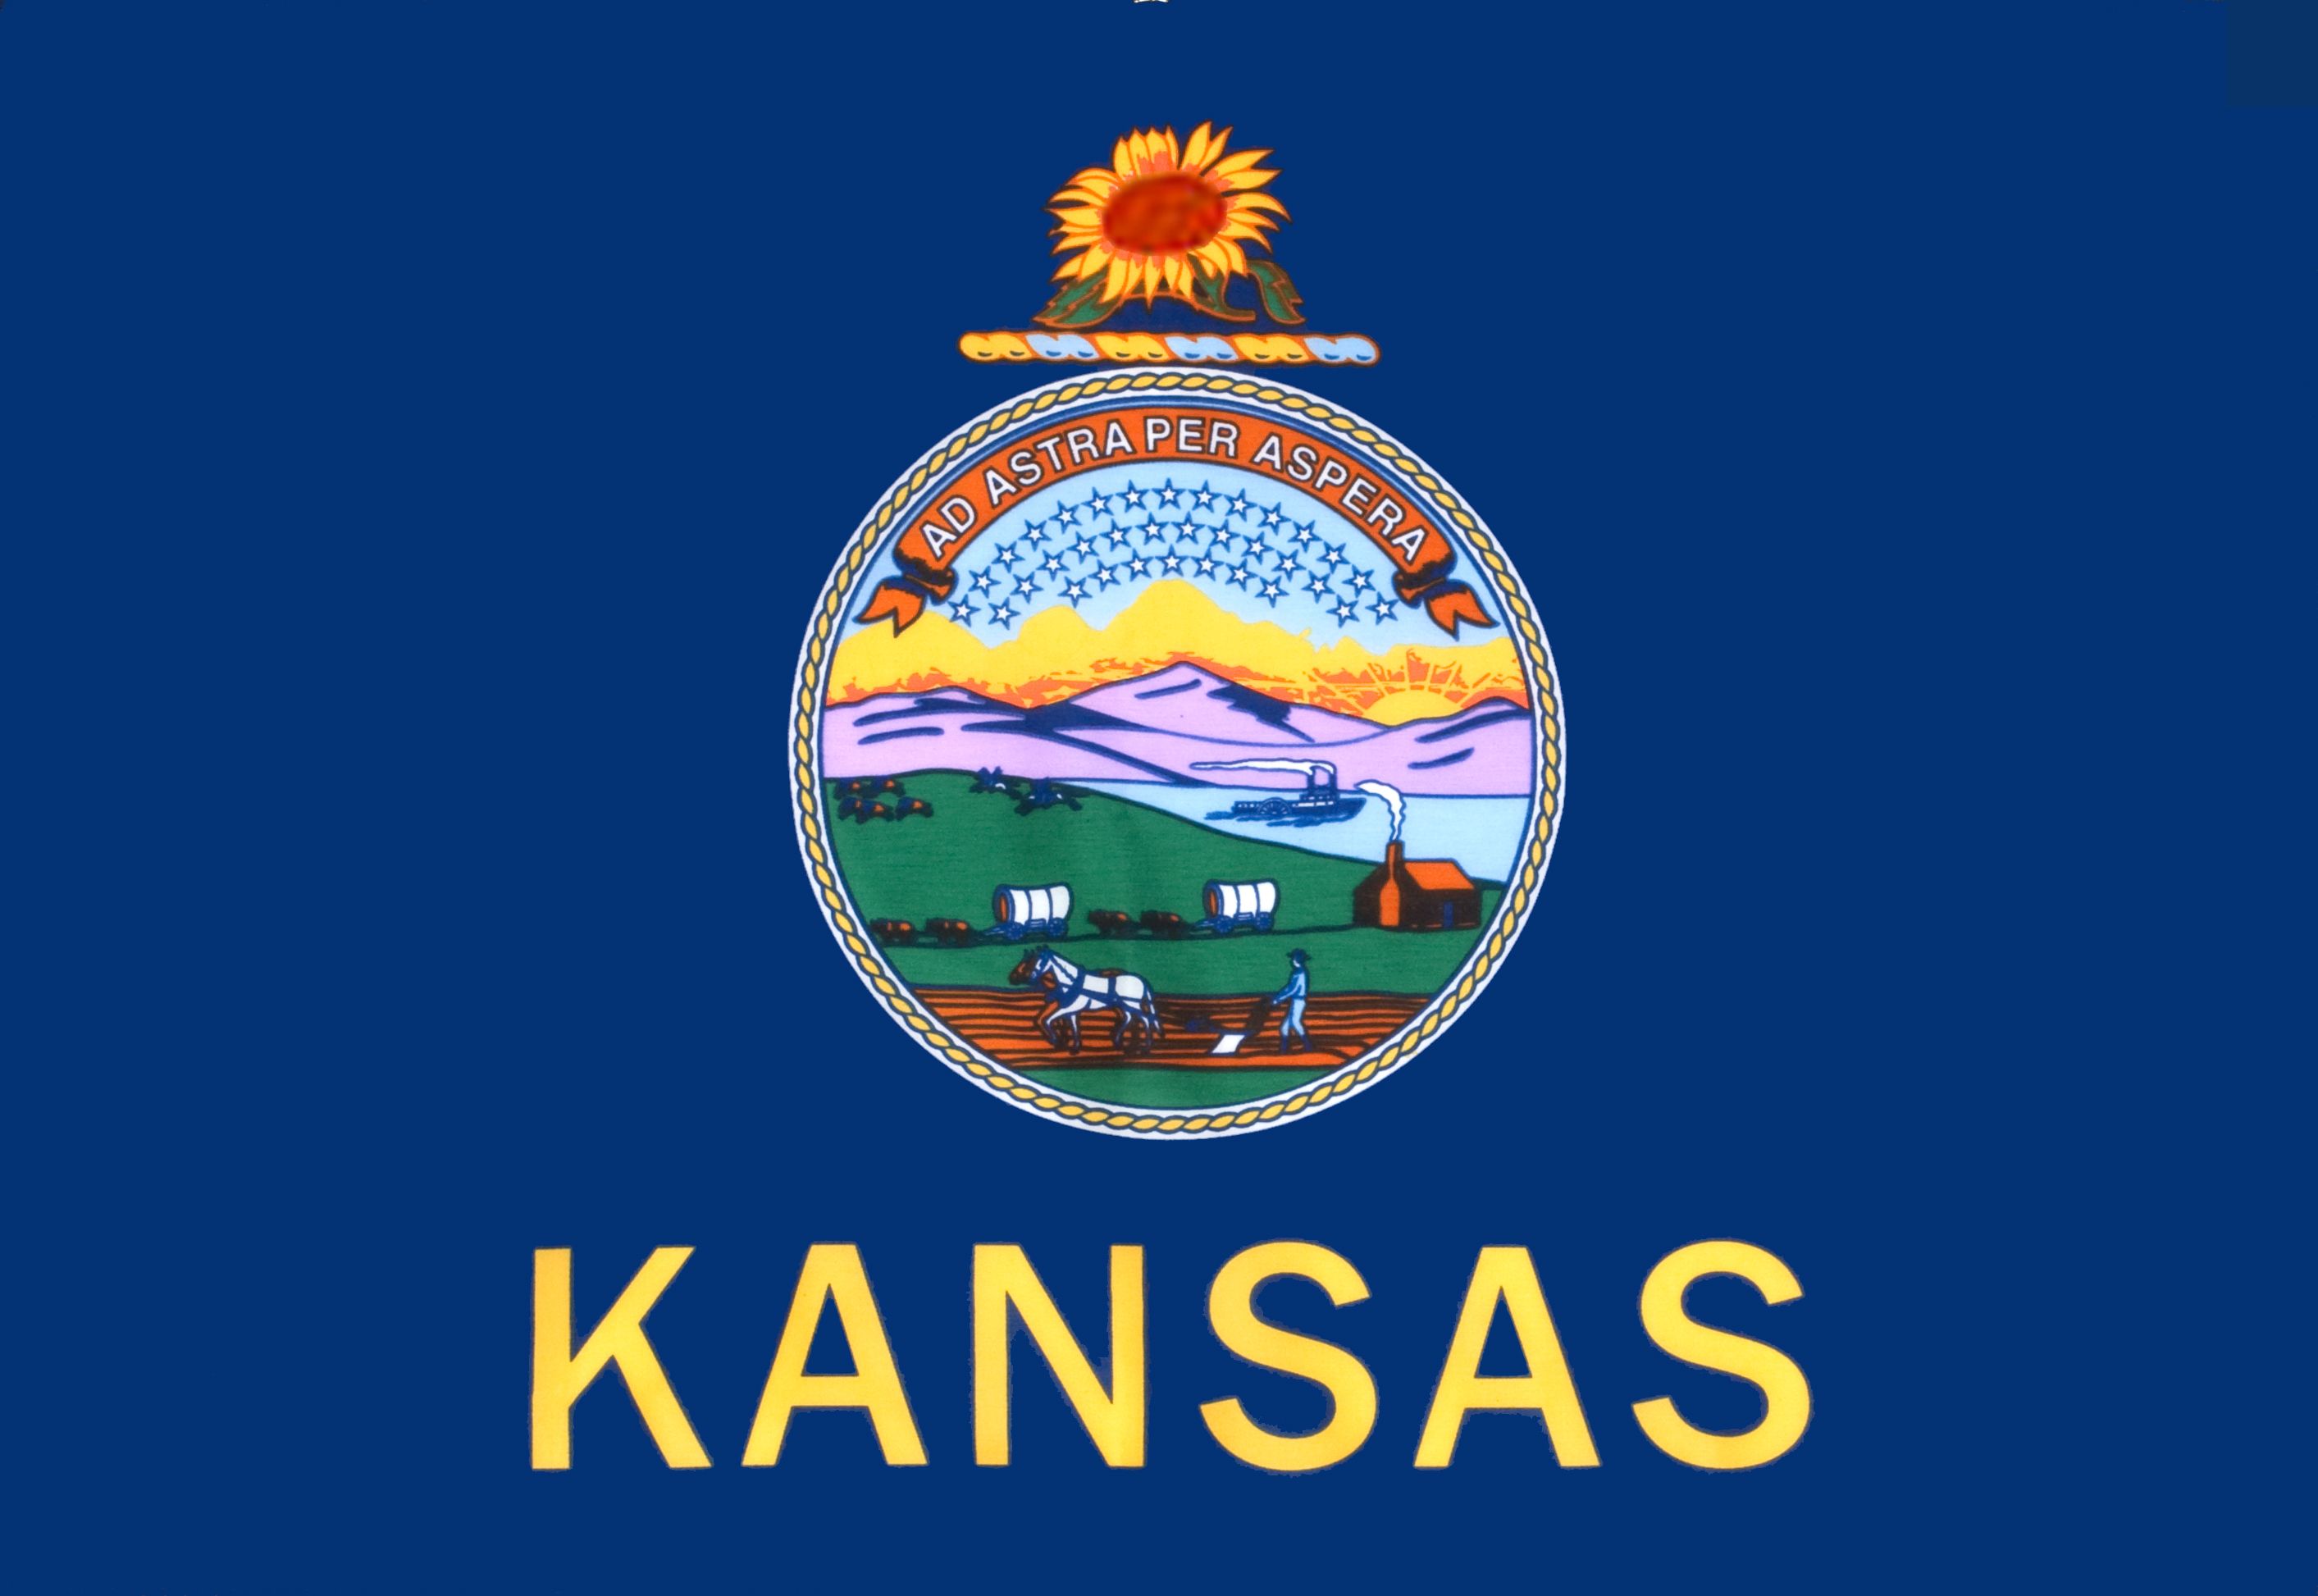 2826x1946px Kansas (1158.32 KB).07.2015